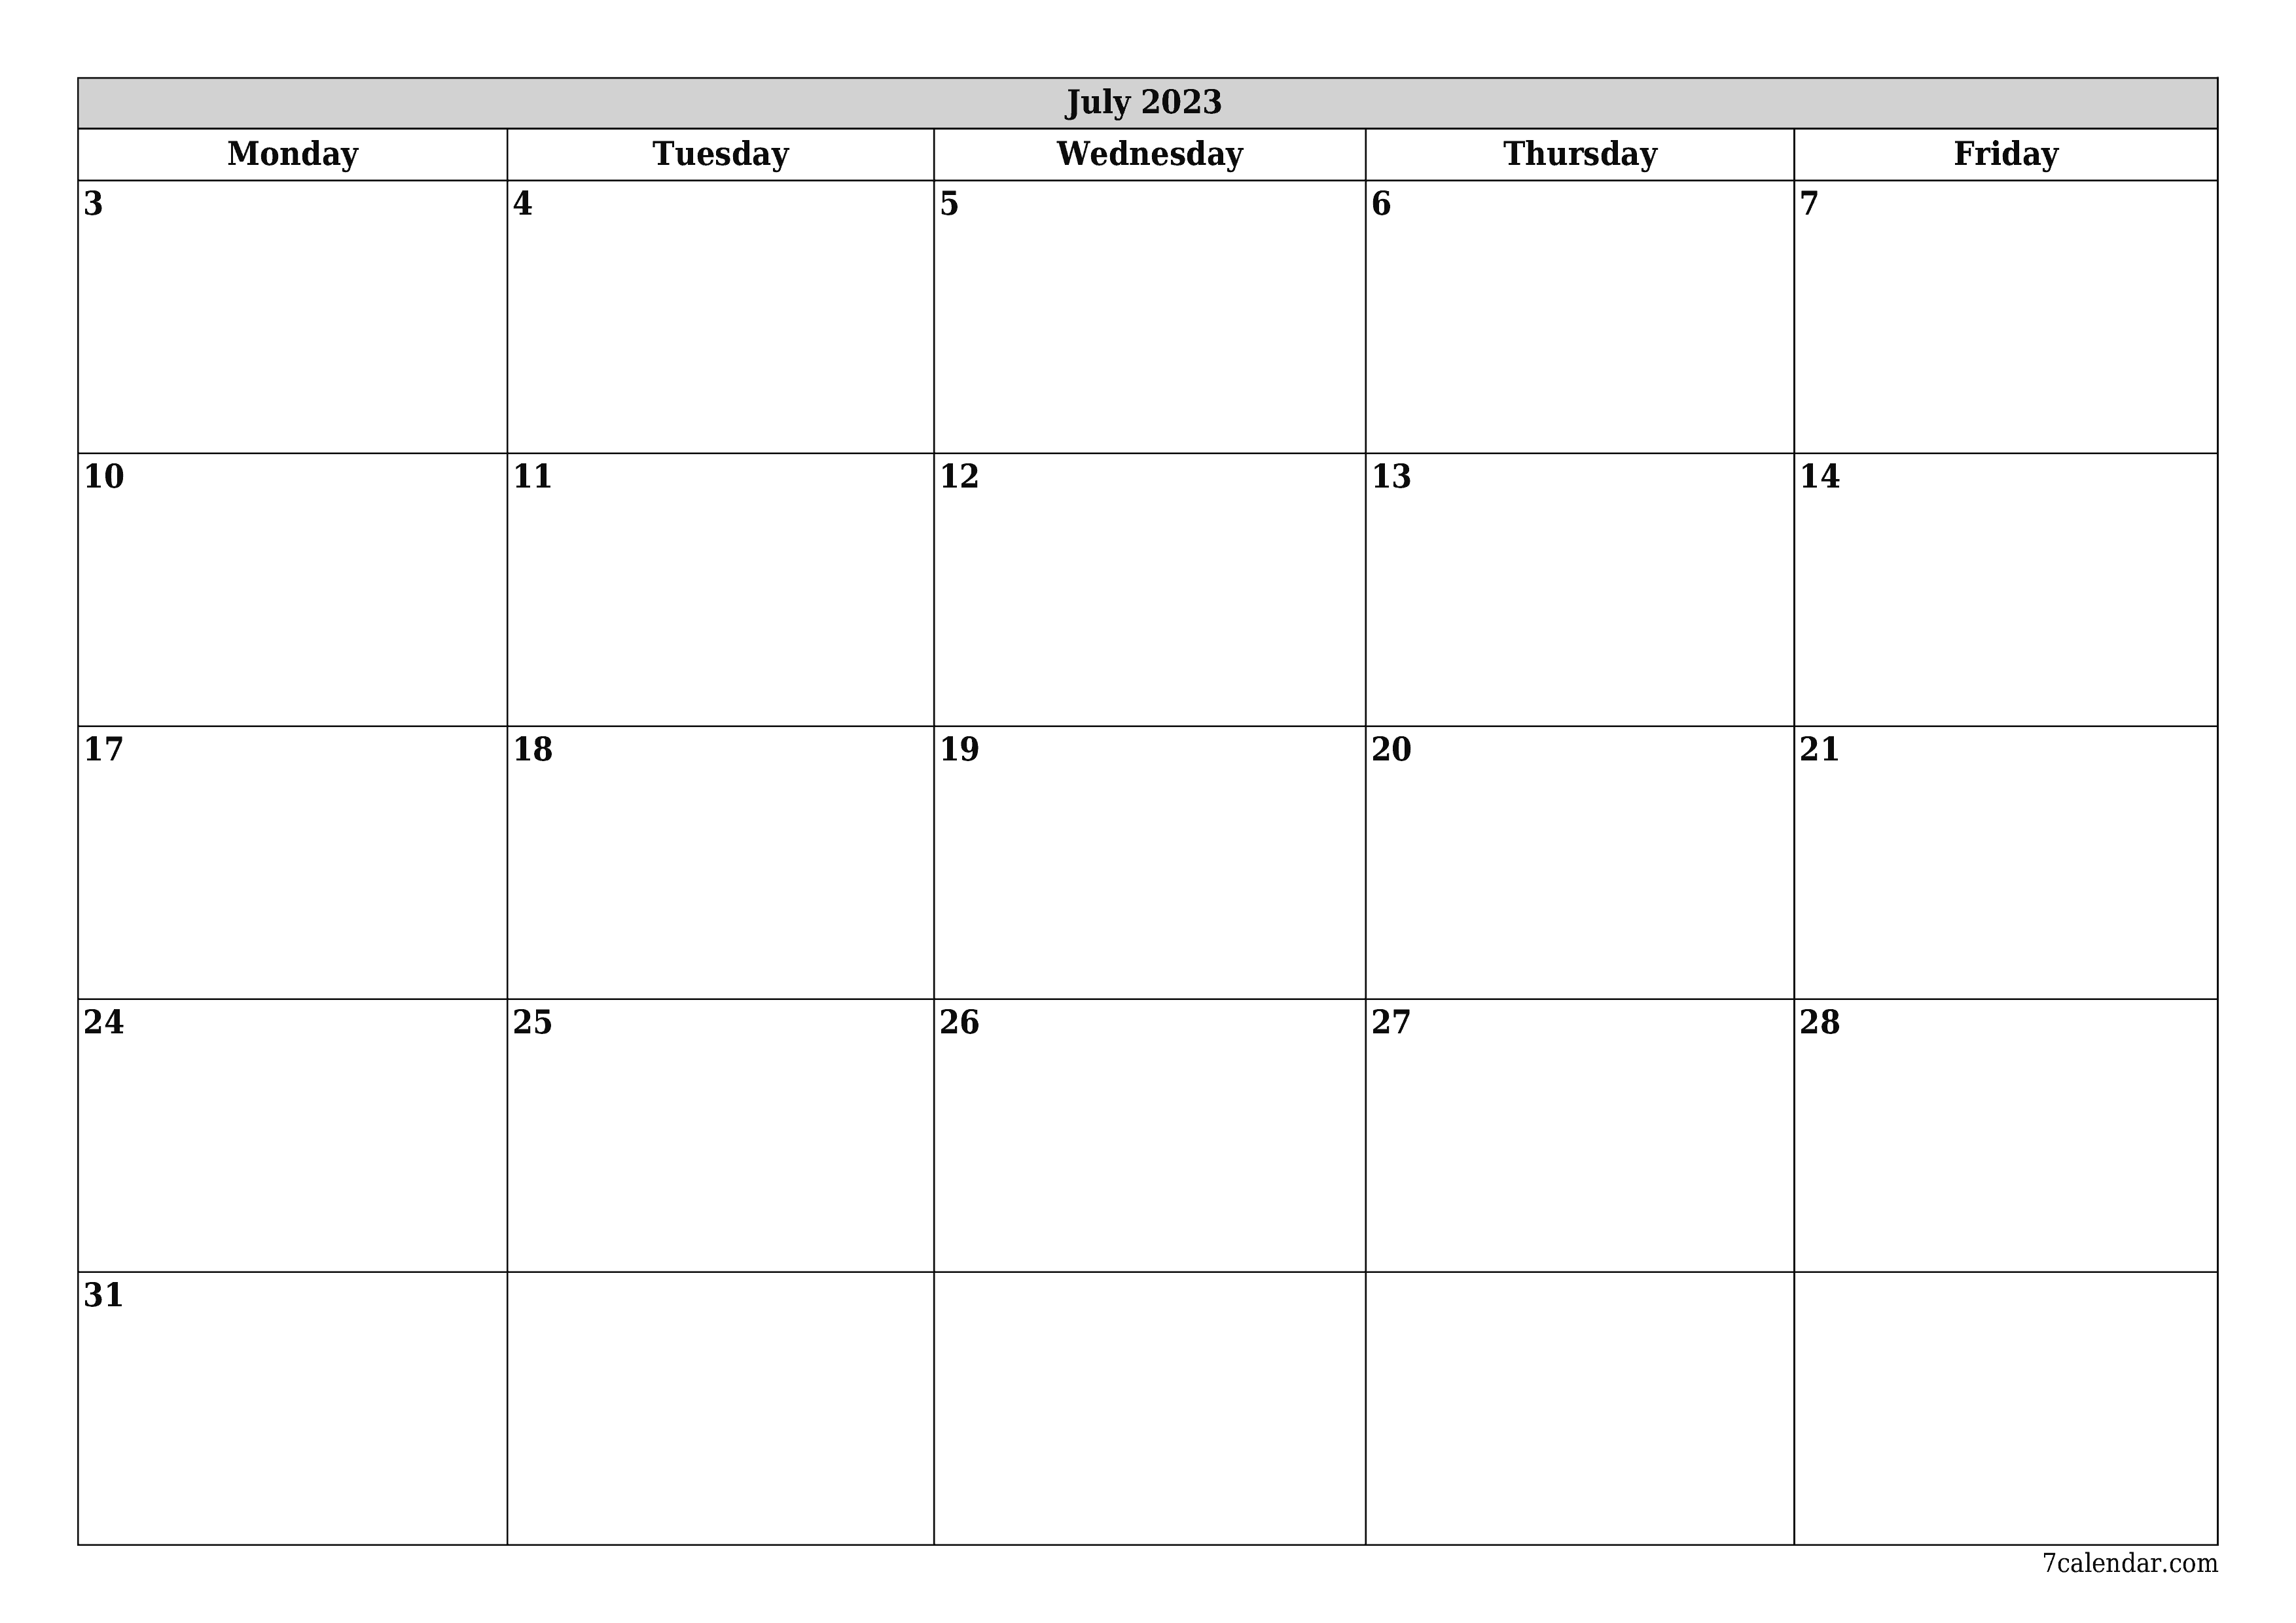 Blank calendar July 2023